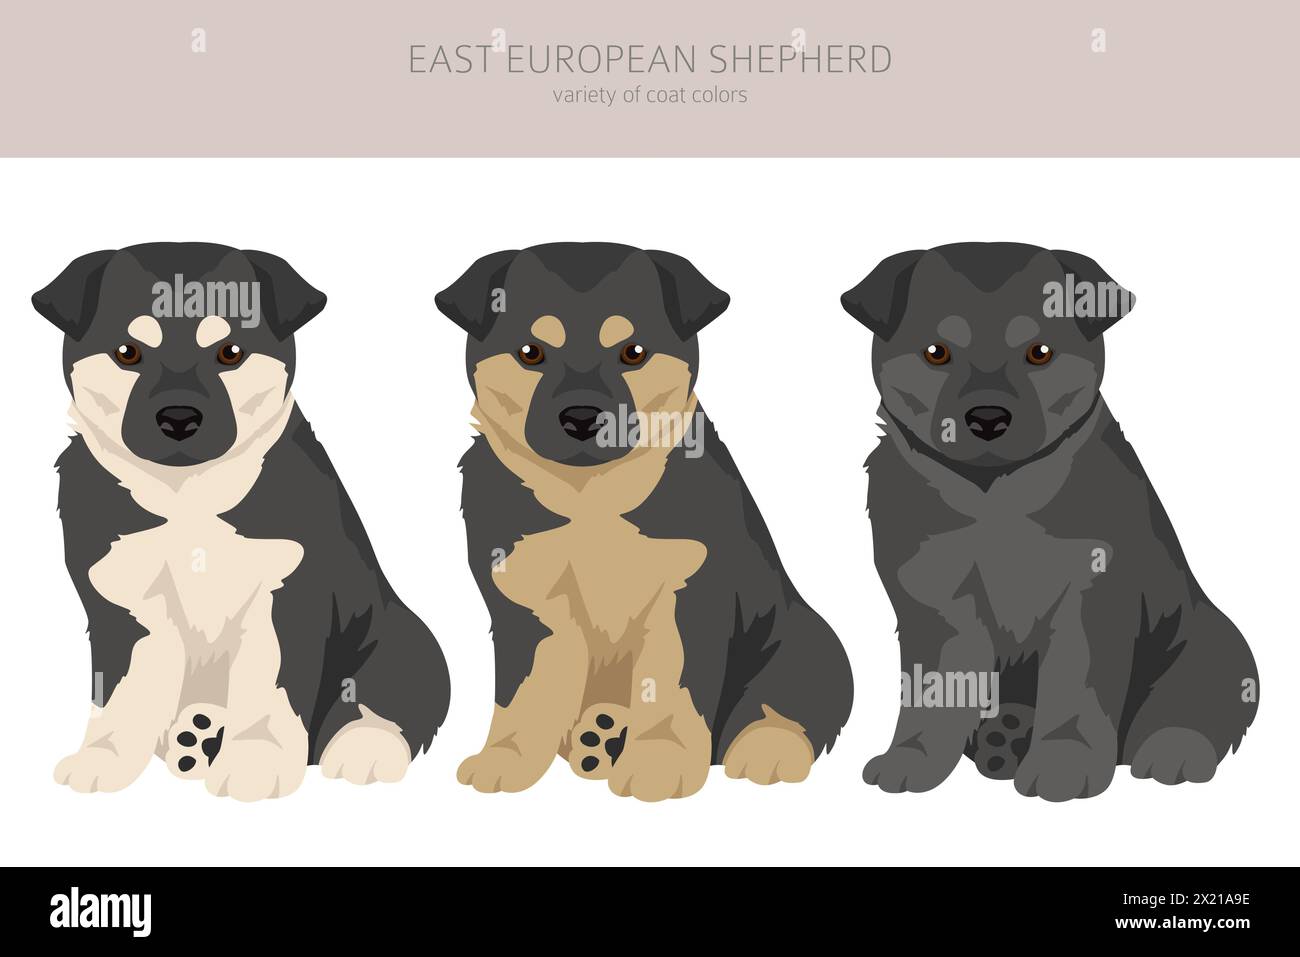 East european shepherd puppies clipart. Different coat colors set.  Vector illustration Stock Vector